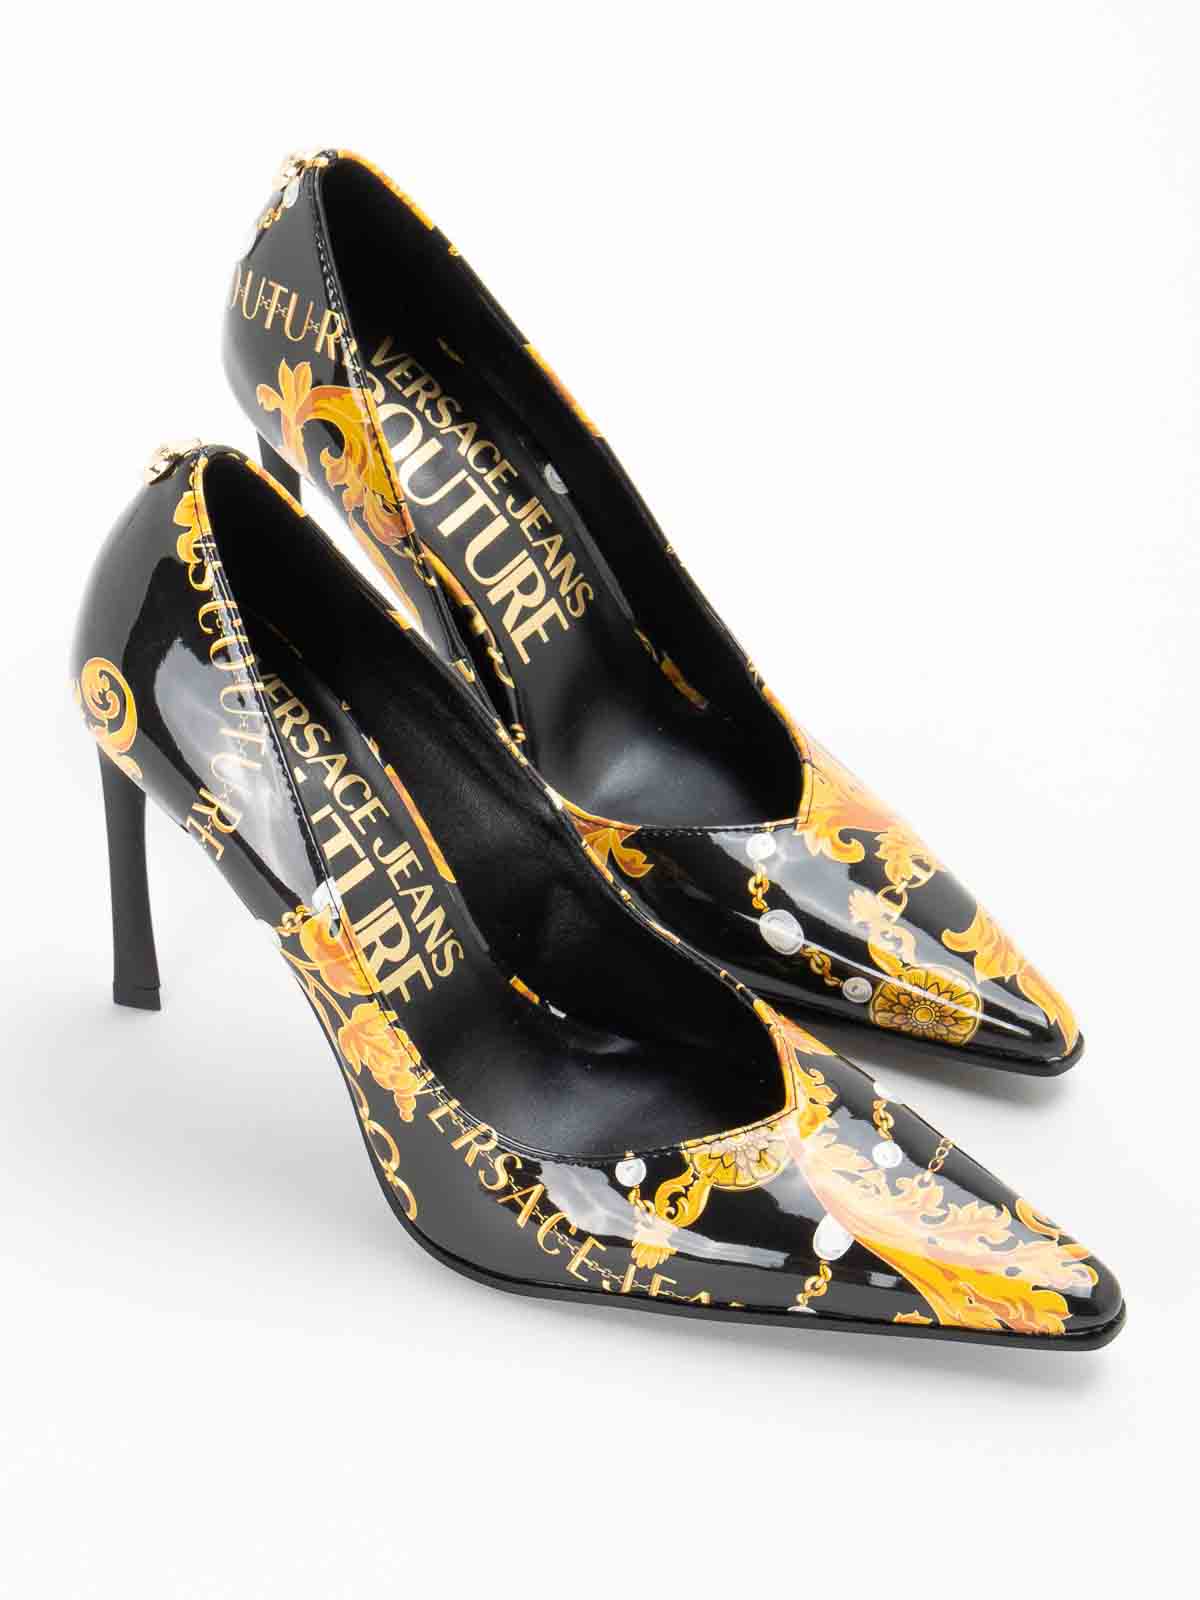 Versace Women's Shiny Golden Stones High Heels Shoes Patent Leather Black  Sz 39 | eBay